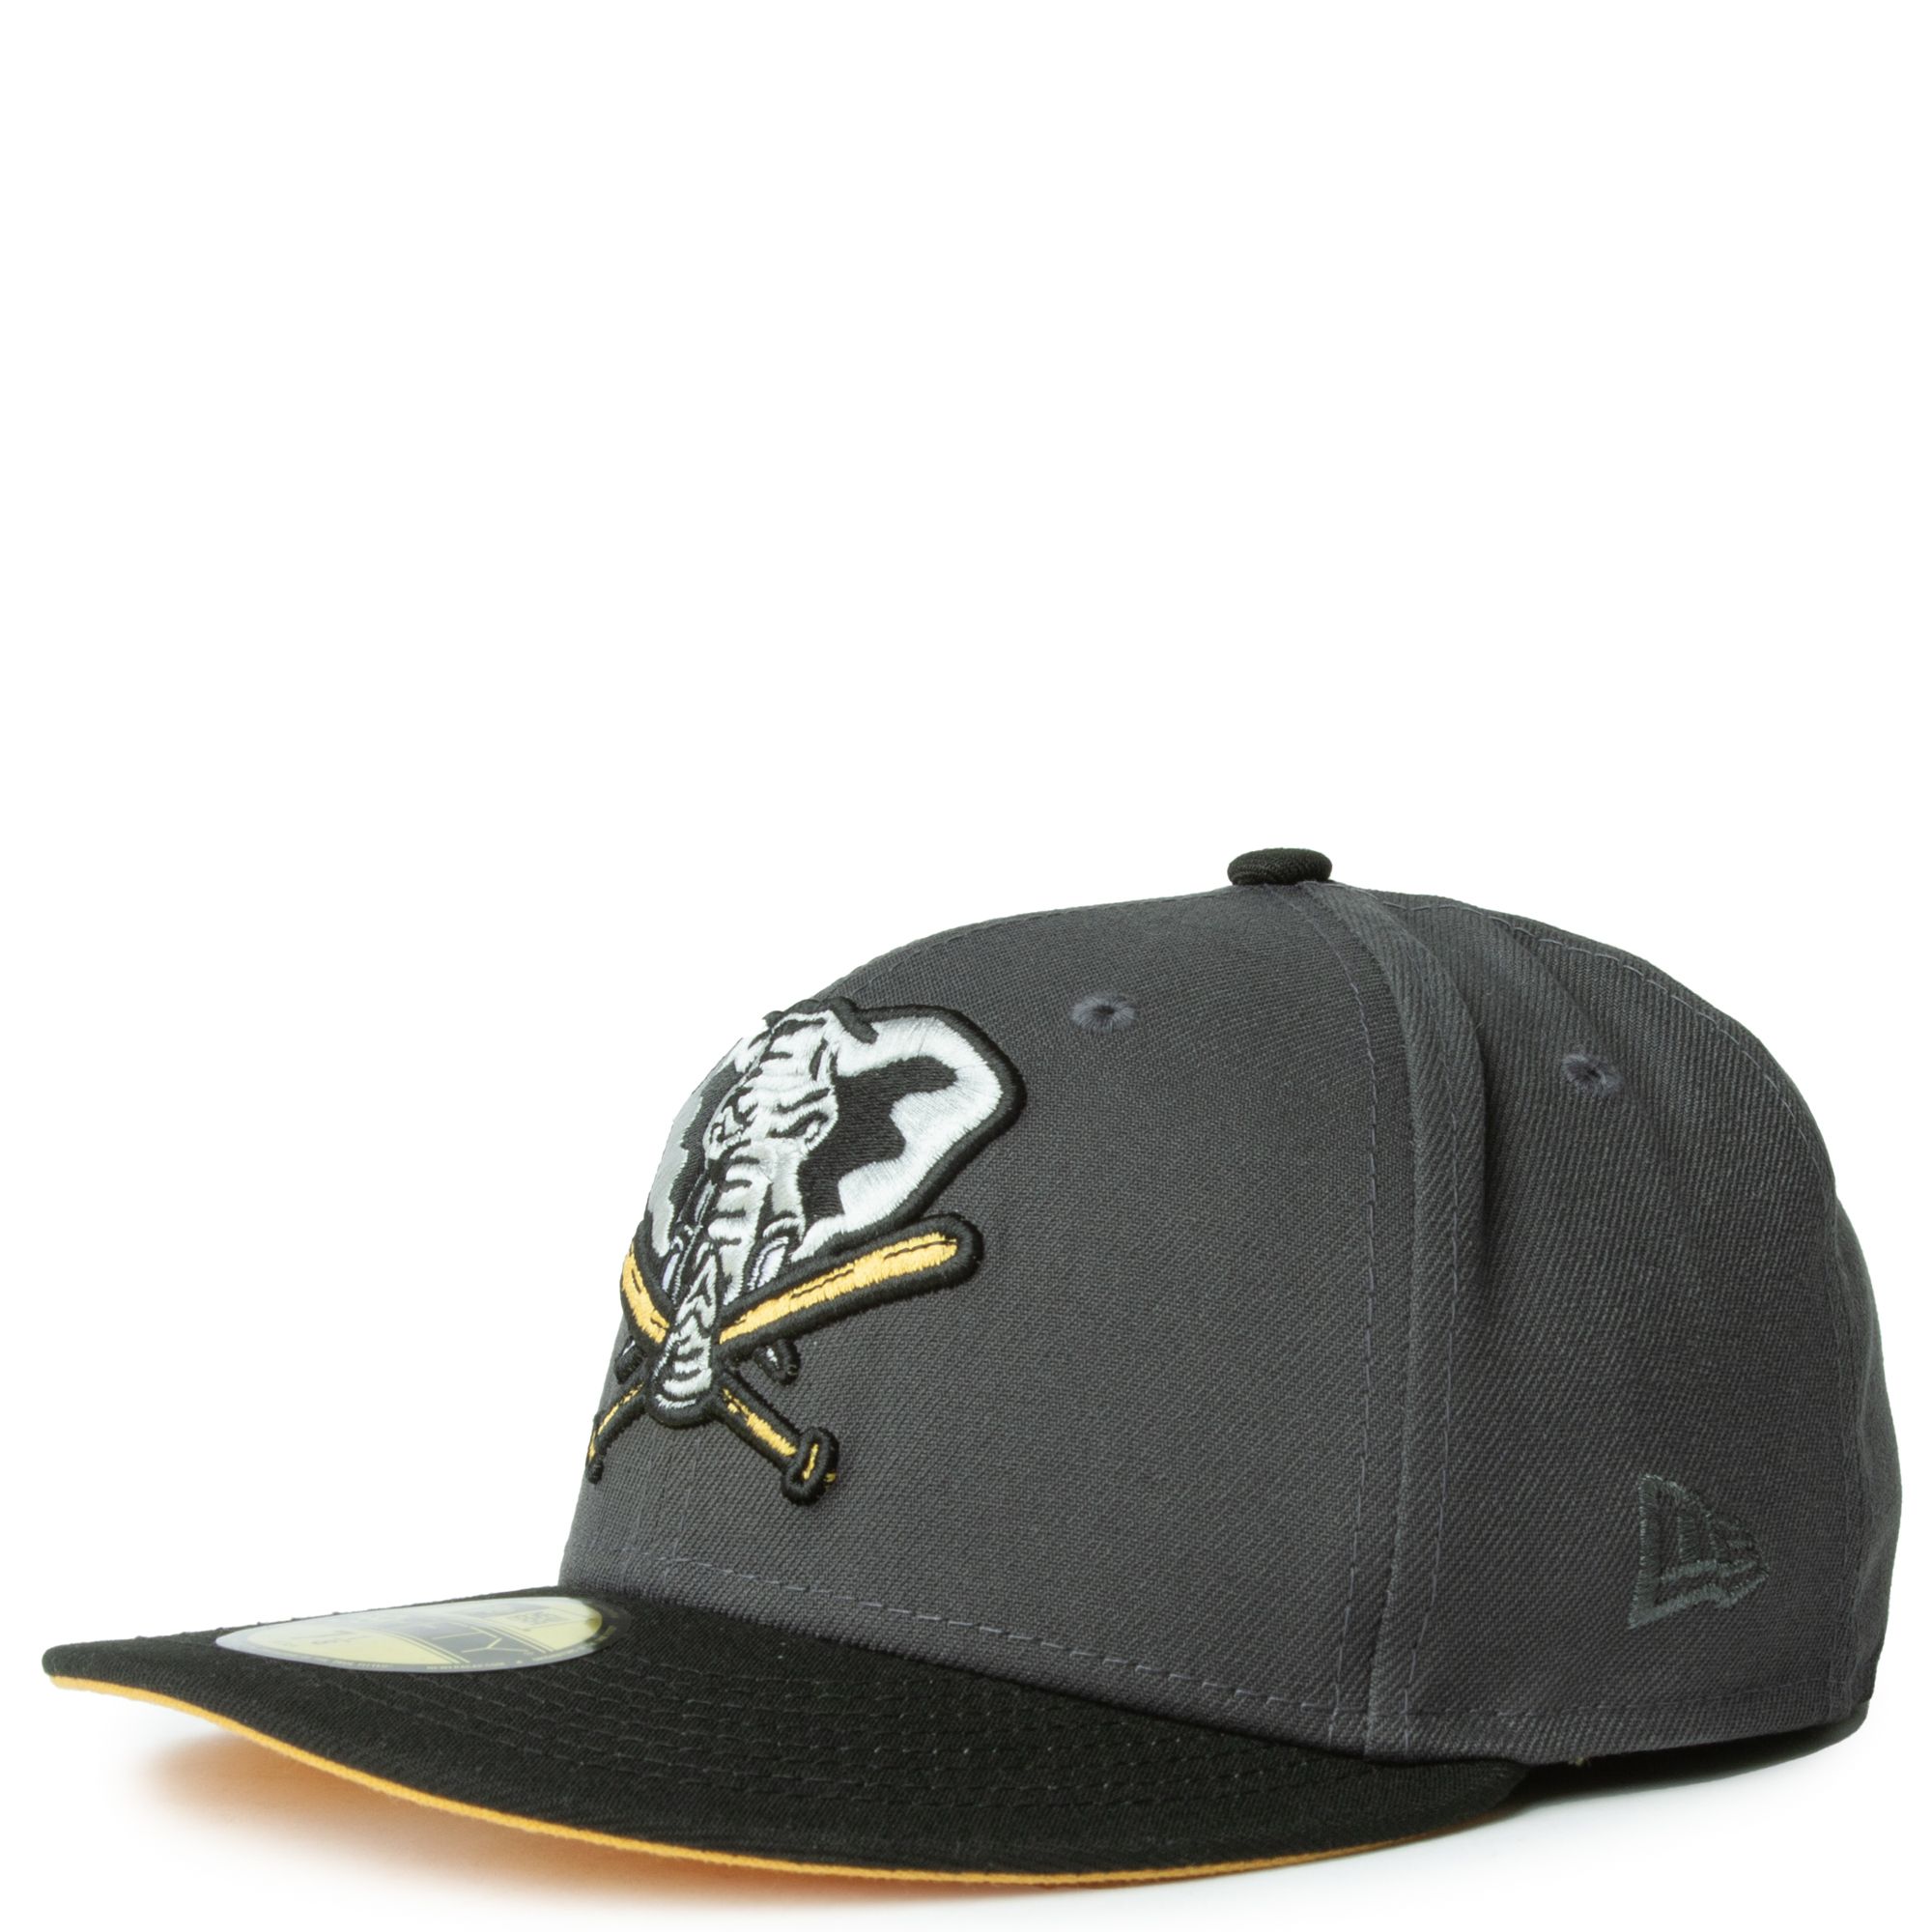 Oakland Athletics New Era Satin Peek 59FIFTY Fitted Hat - Black